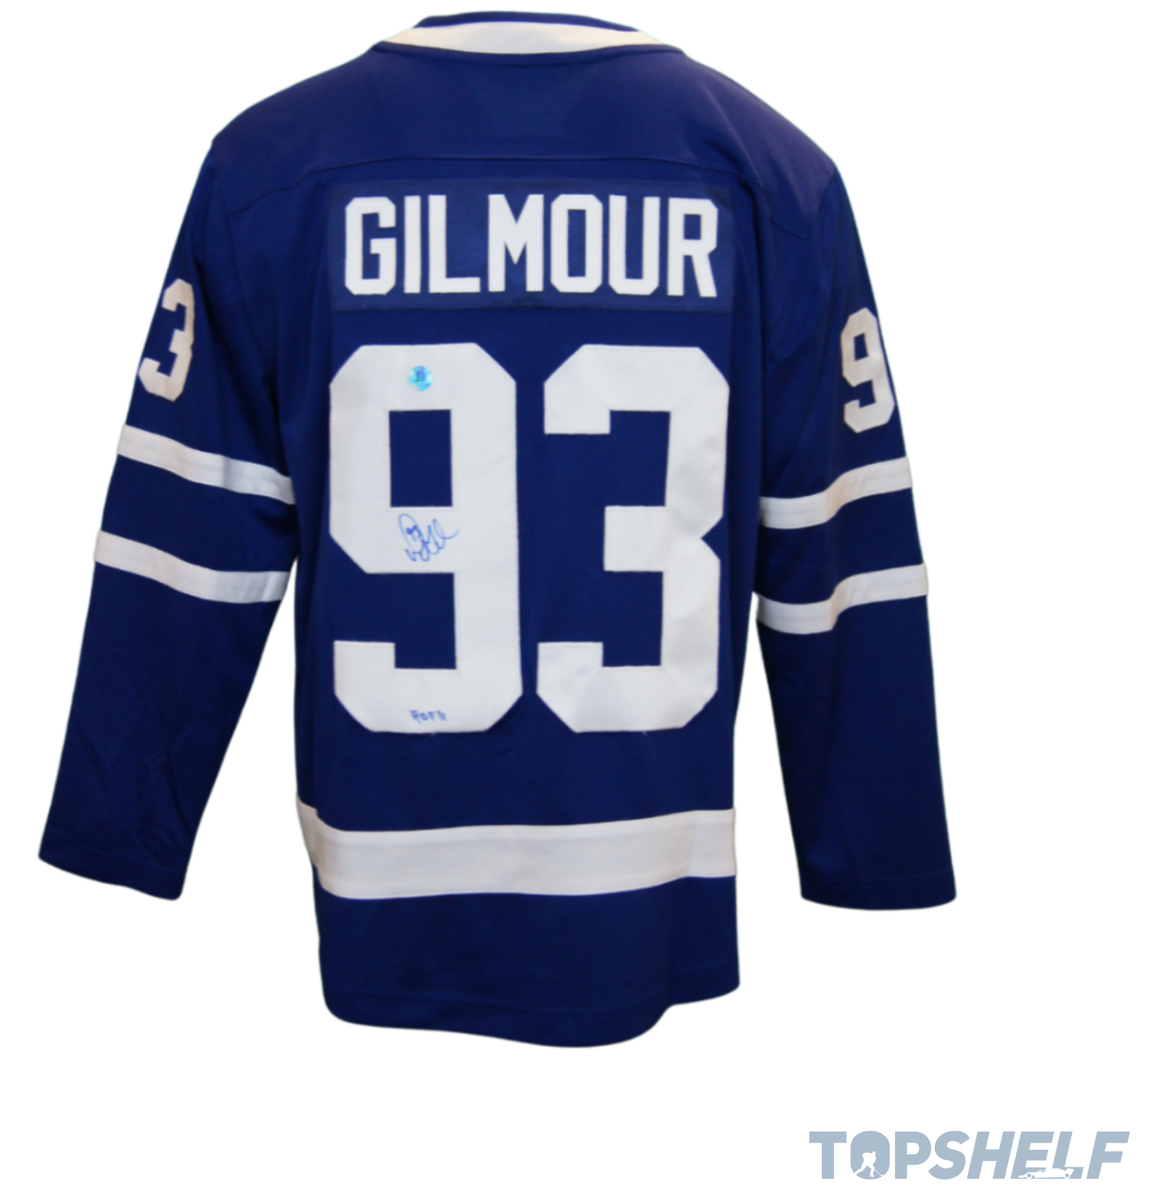 Doug Gilmour Signed Maple Leafs Jersey Inscribed HOF 11 (JSA COA